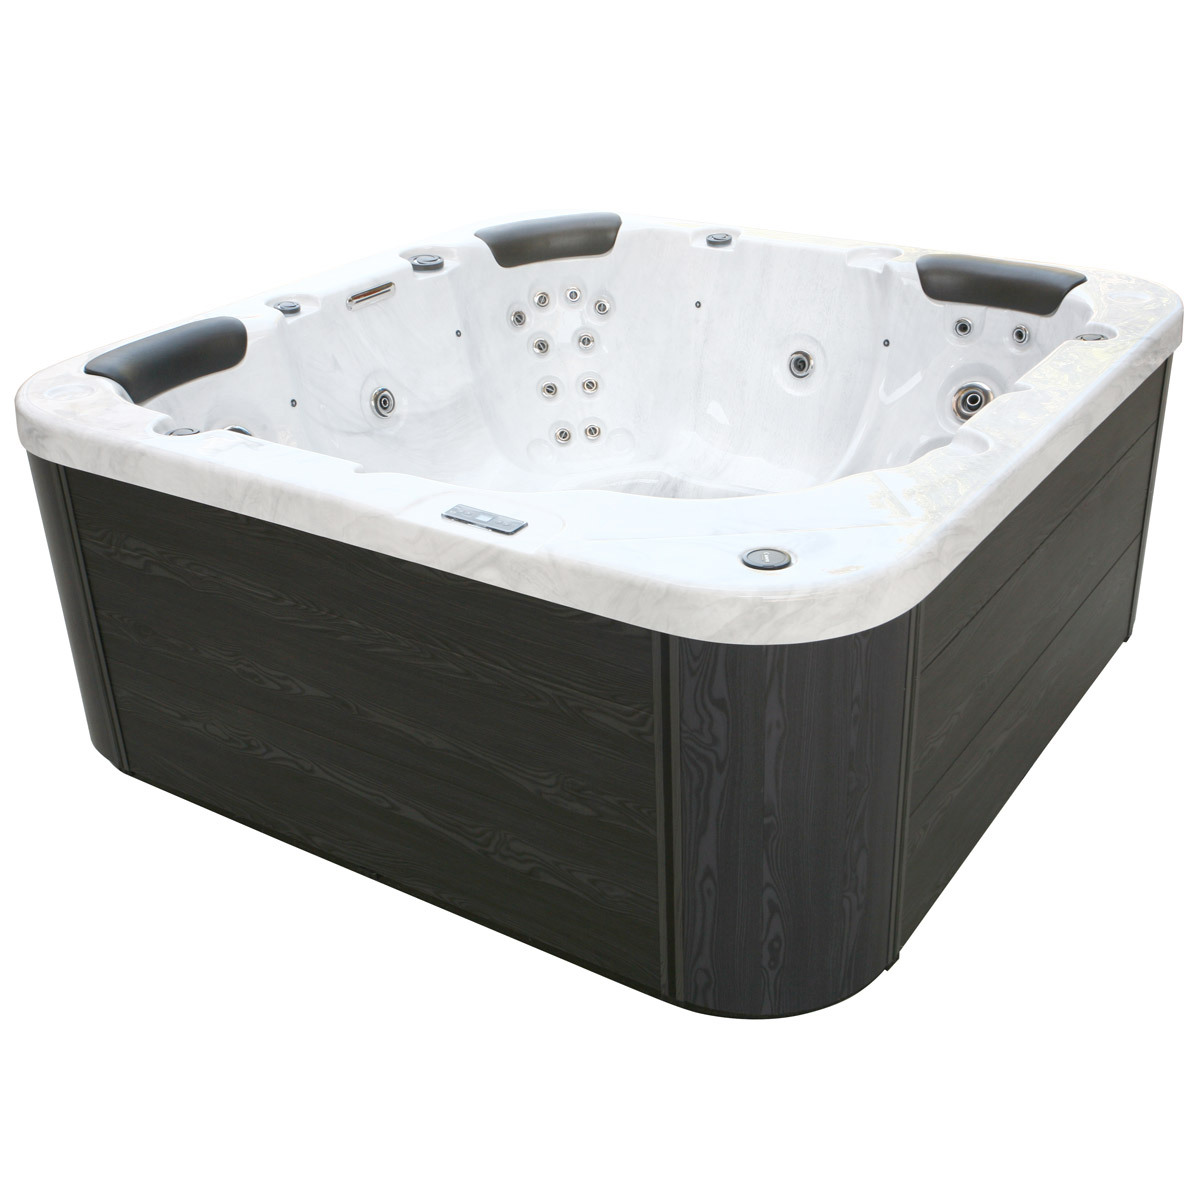 Image for Superior Spa Torina Hot Tub External